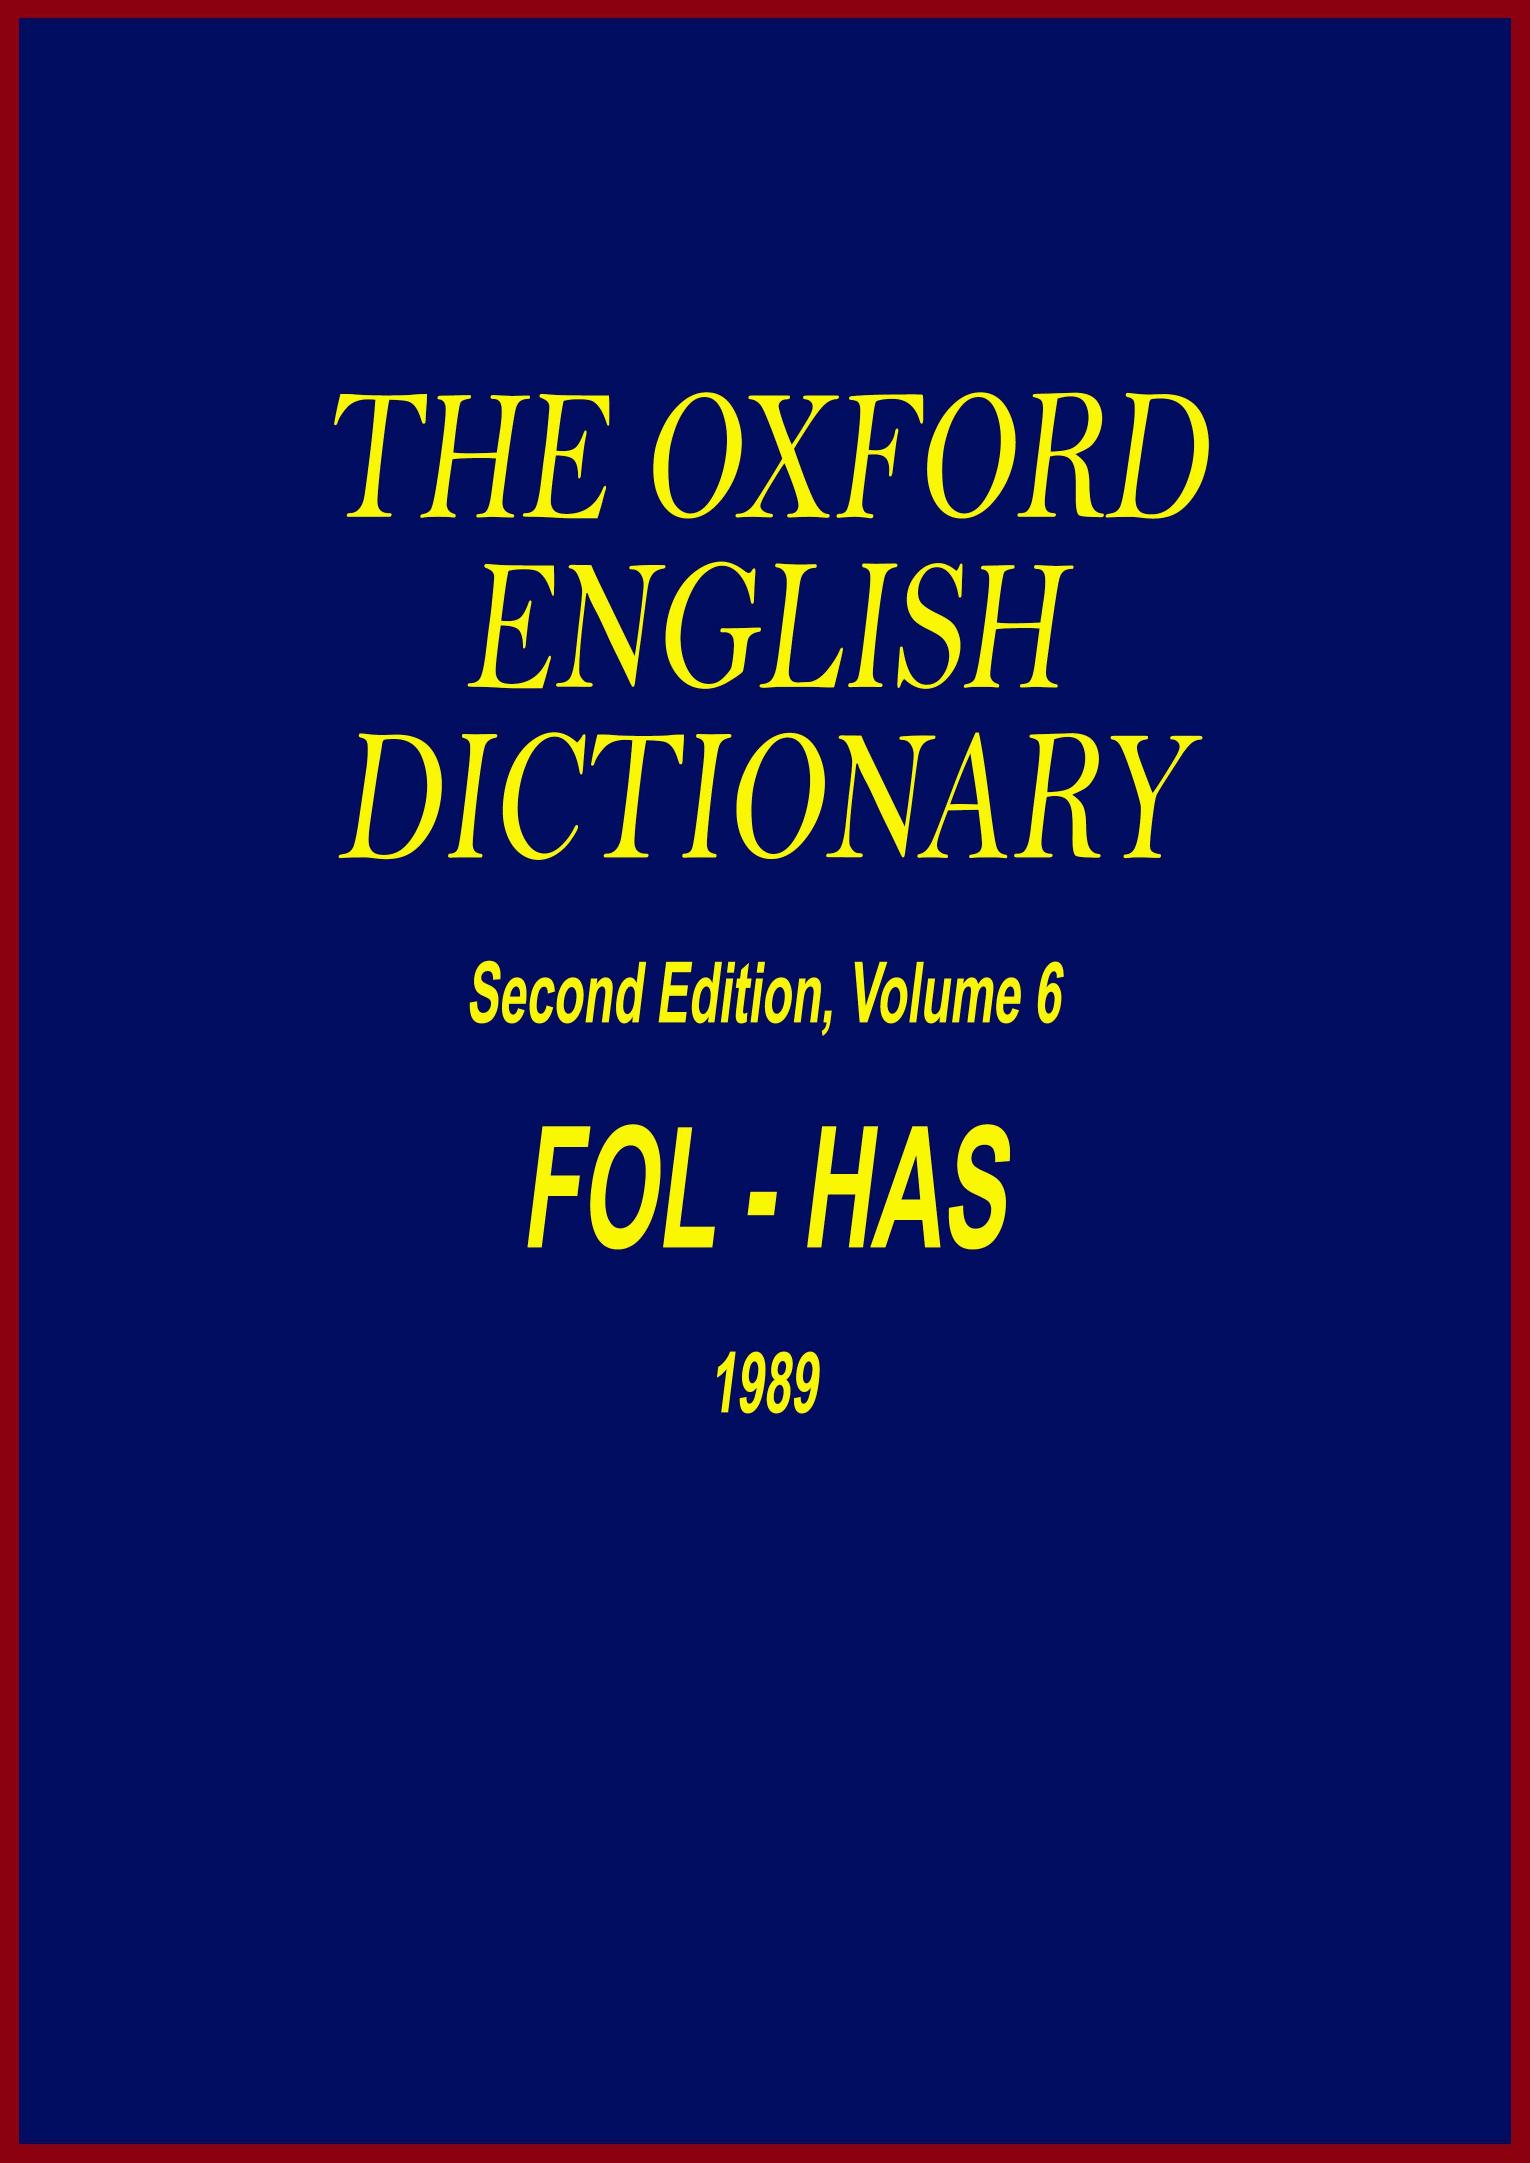 The Oxford English Dictionary - FOL-HAS